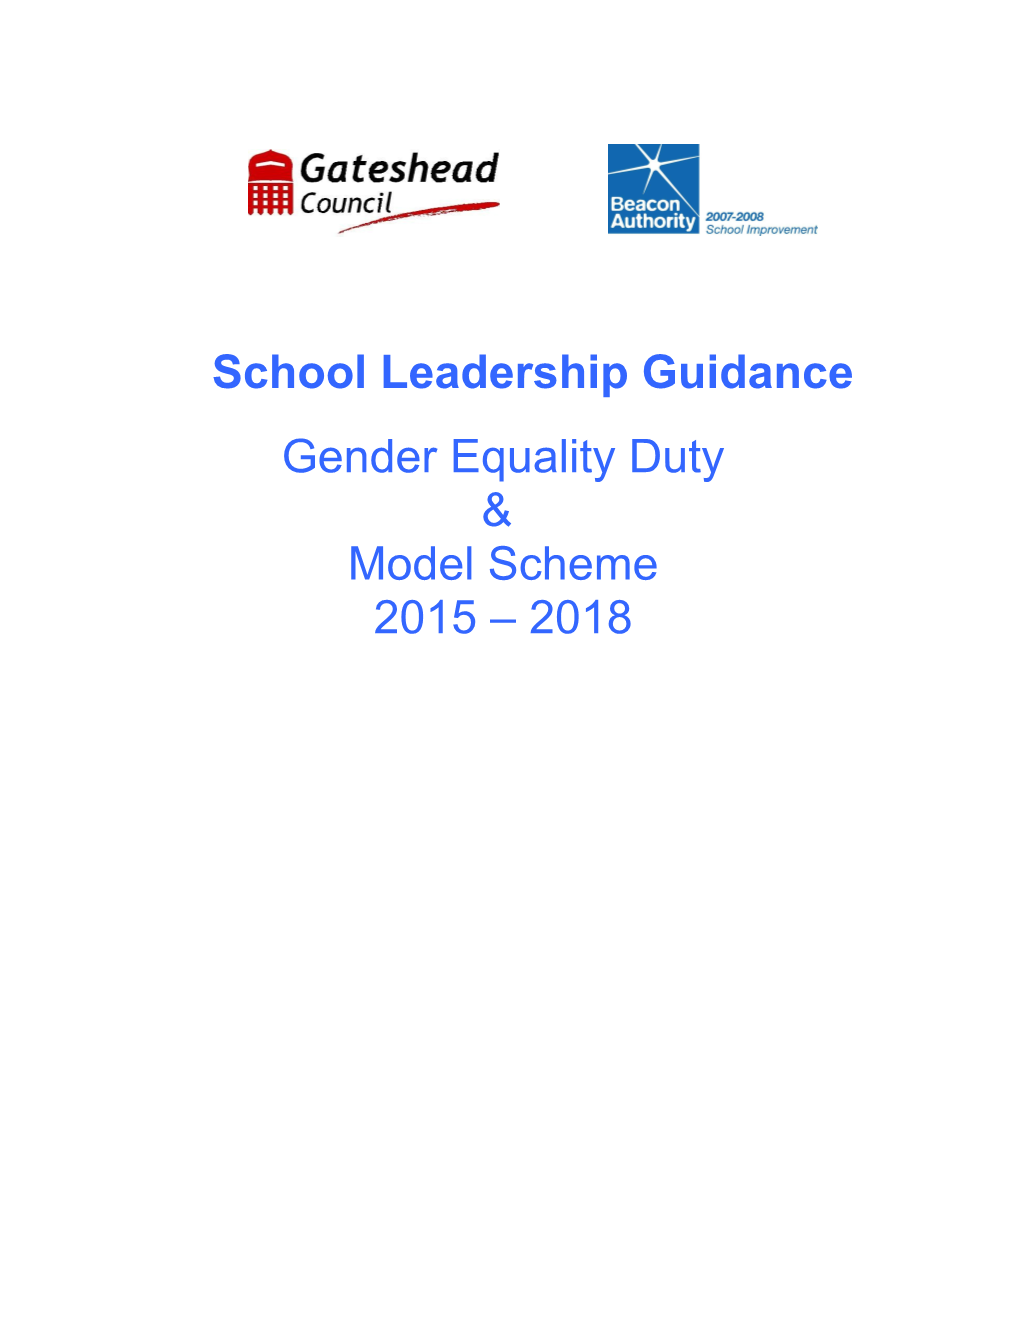 Gender Equality Duty Scheme